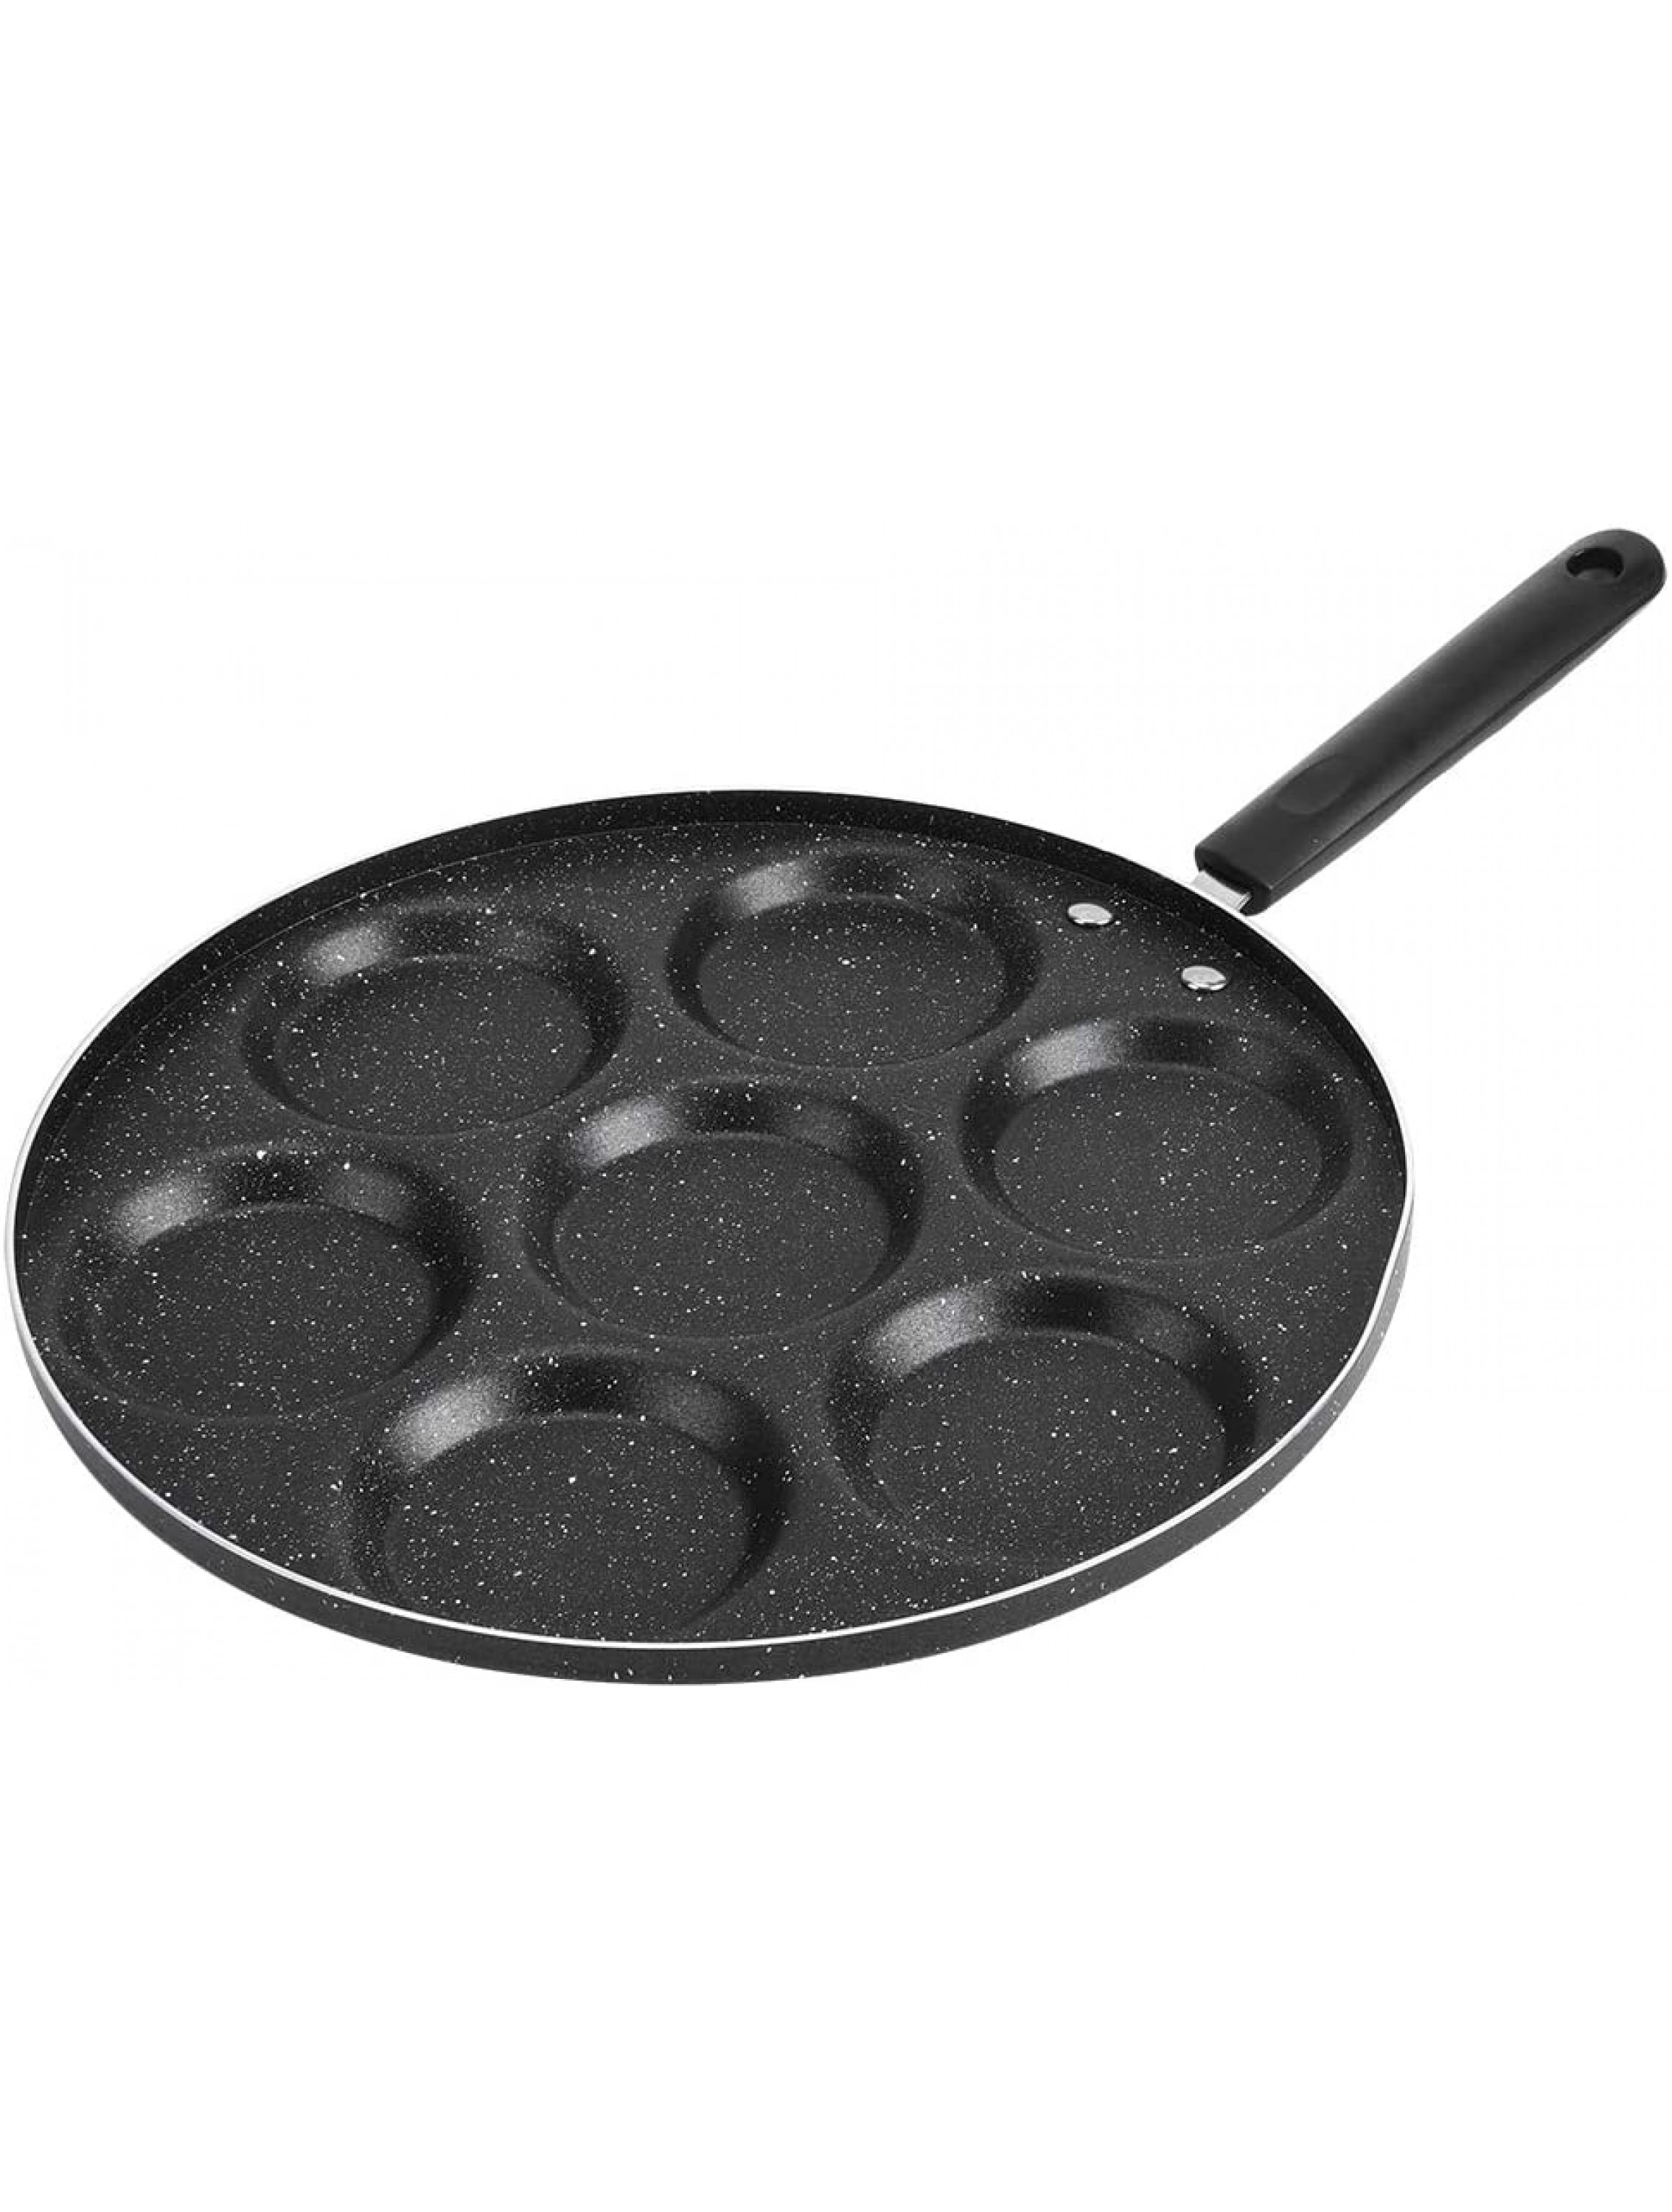 Egg Frying Pan 7-Grid Multi Egg Cooking Pan Non Sticking Plett Pan for Restaurant Hotel Household Kitchen Use - BX1SF0QQ7